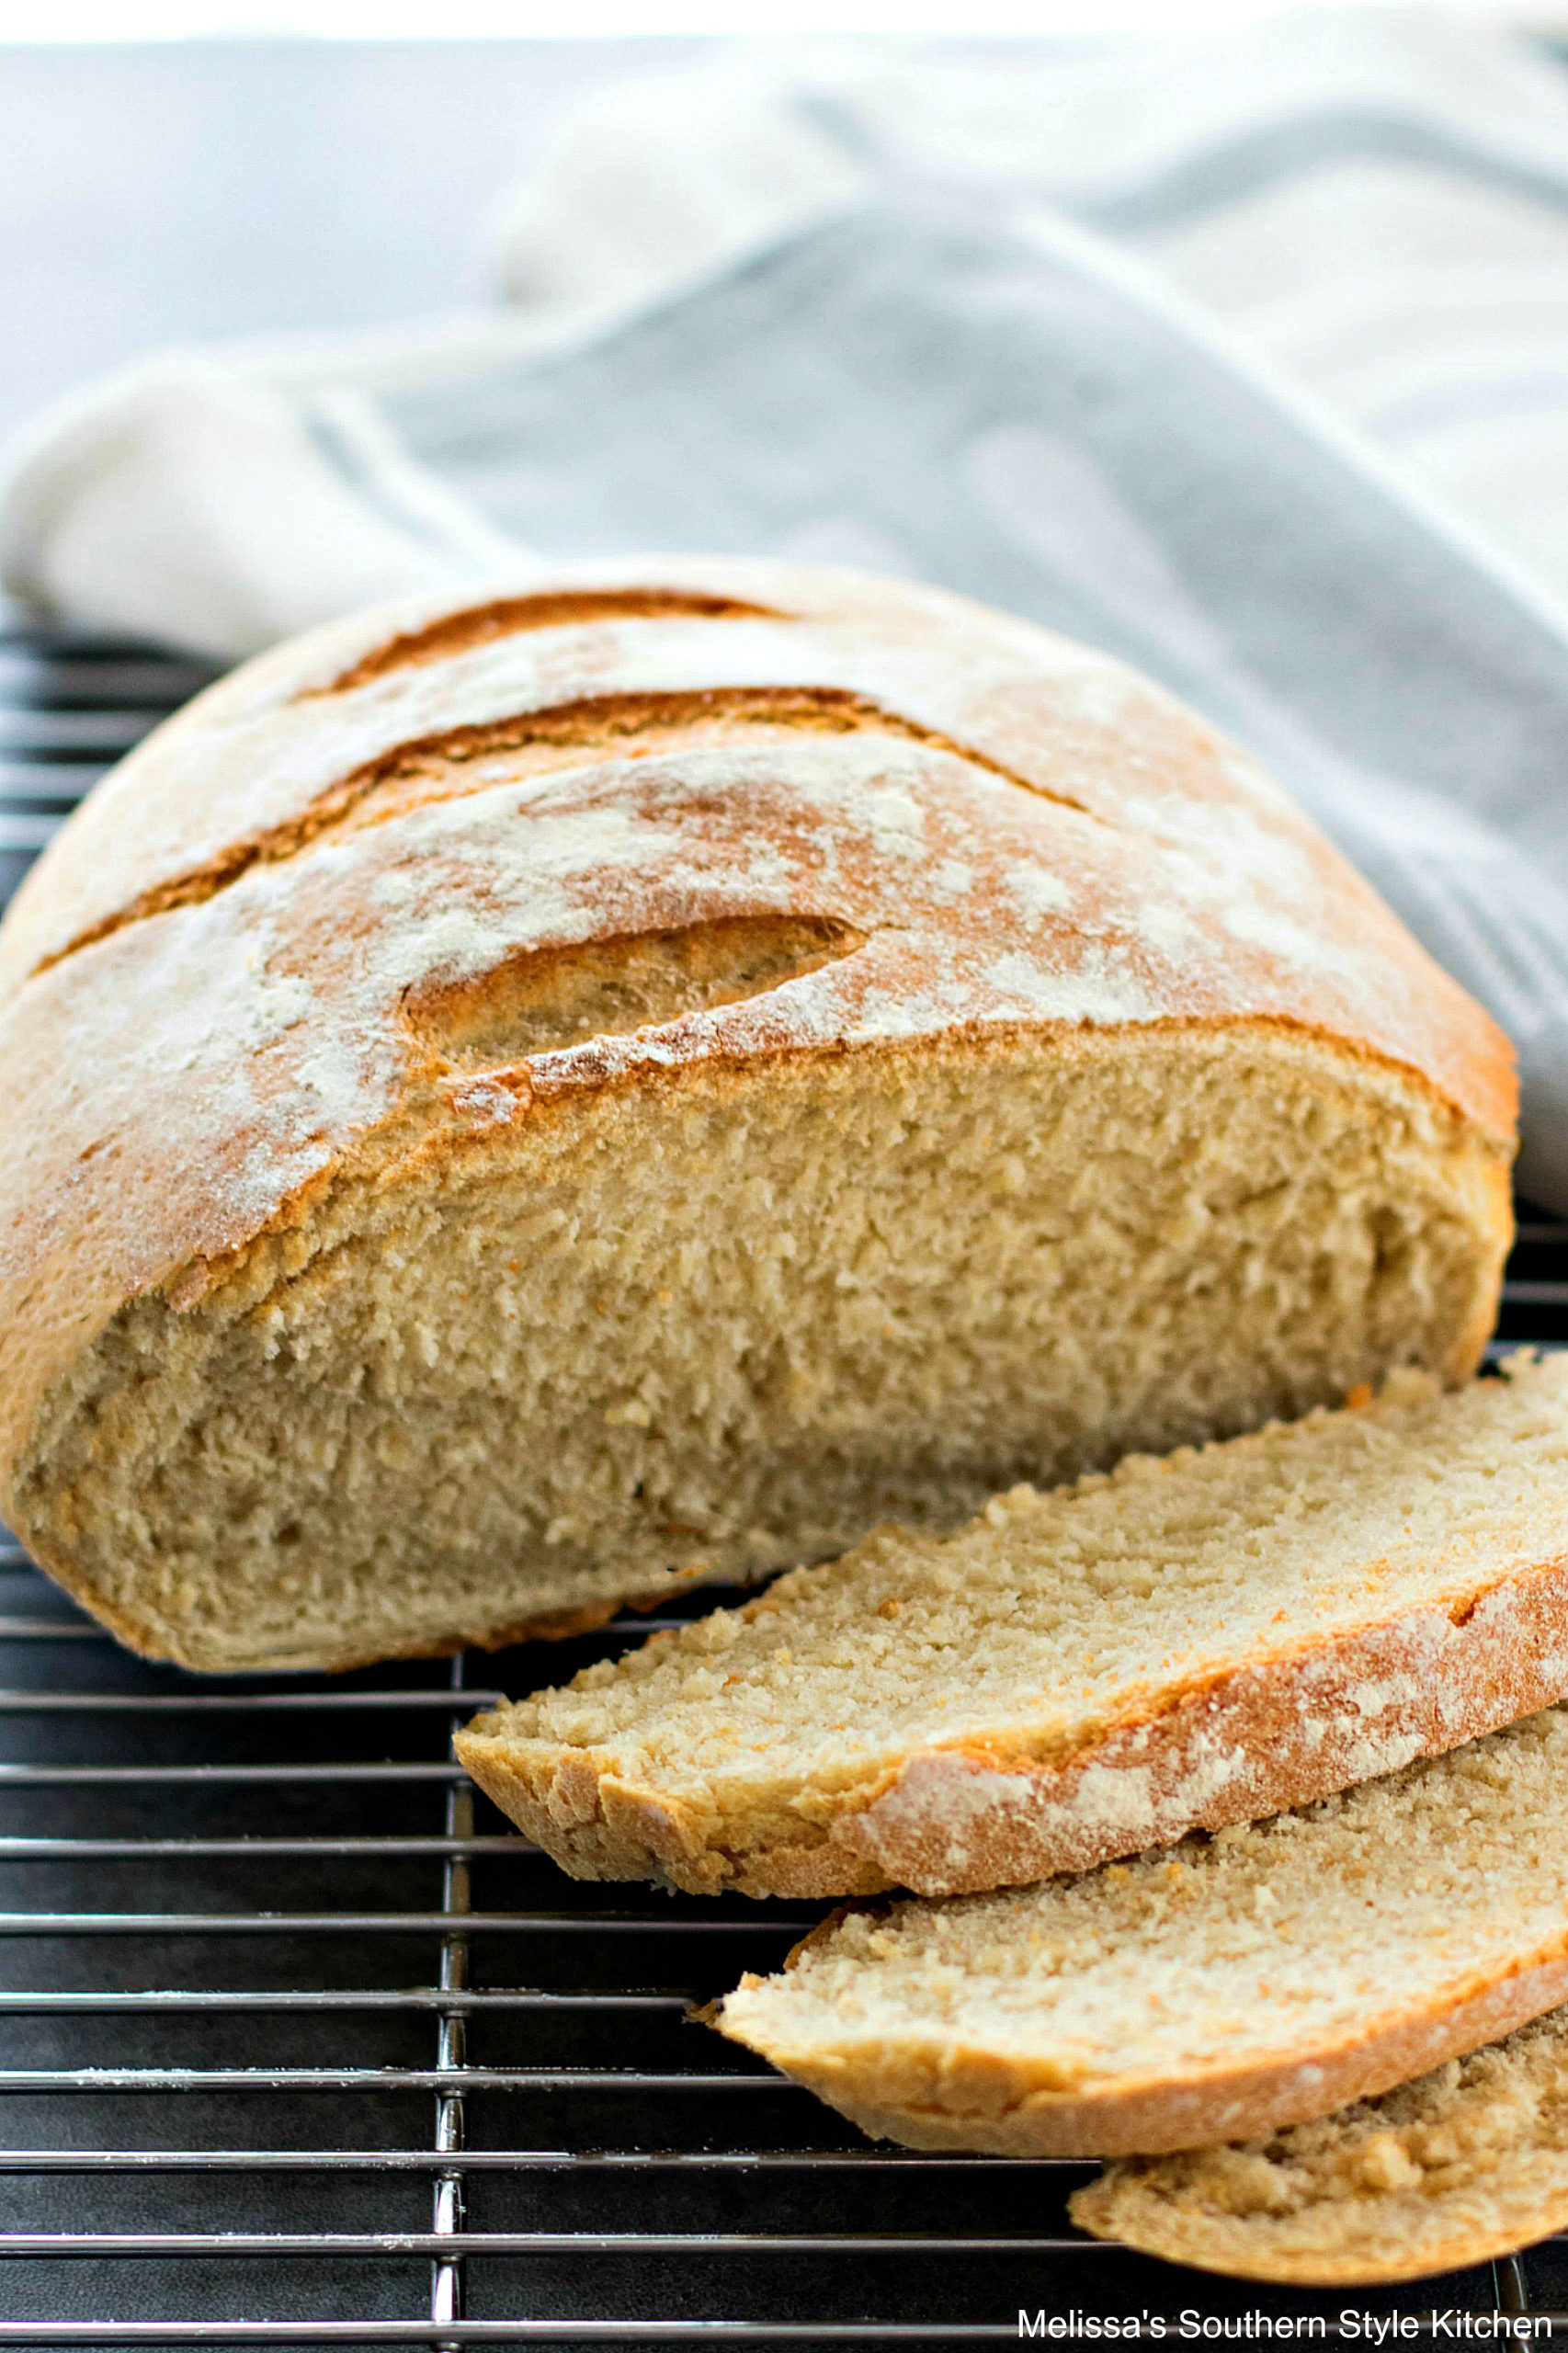 Homemade Dutch Oven Bread – Victoria SIGNATUREseries